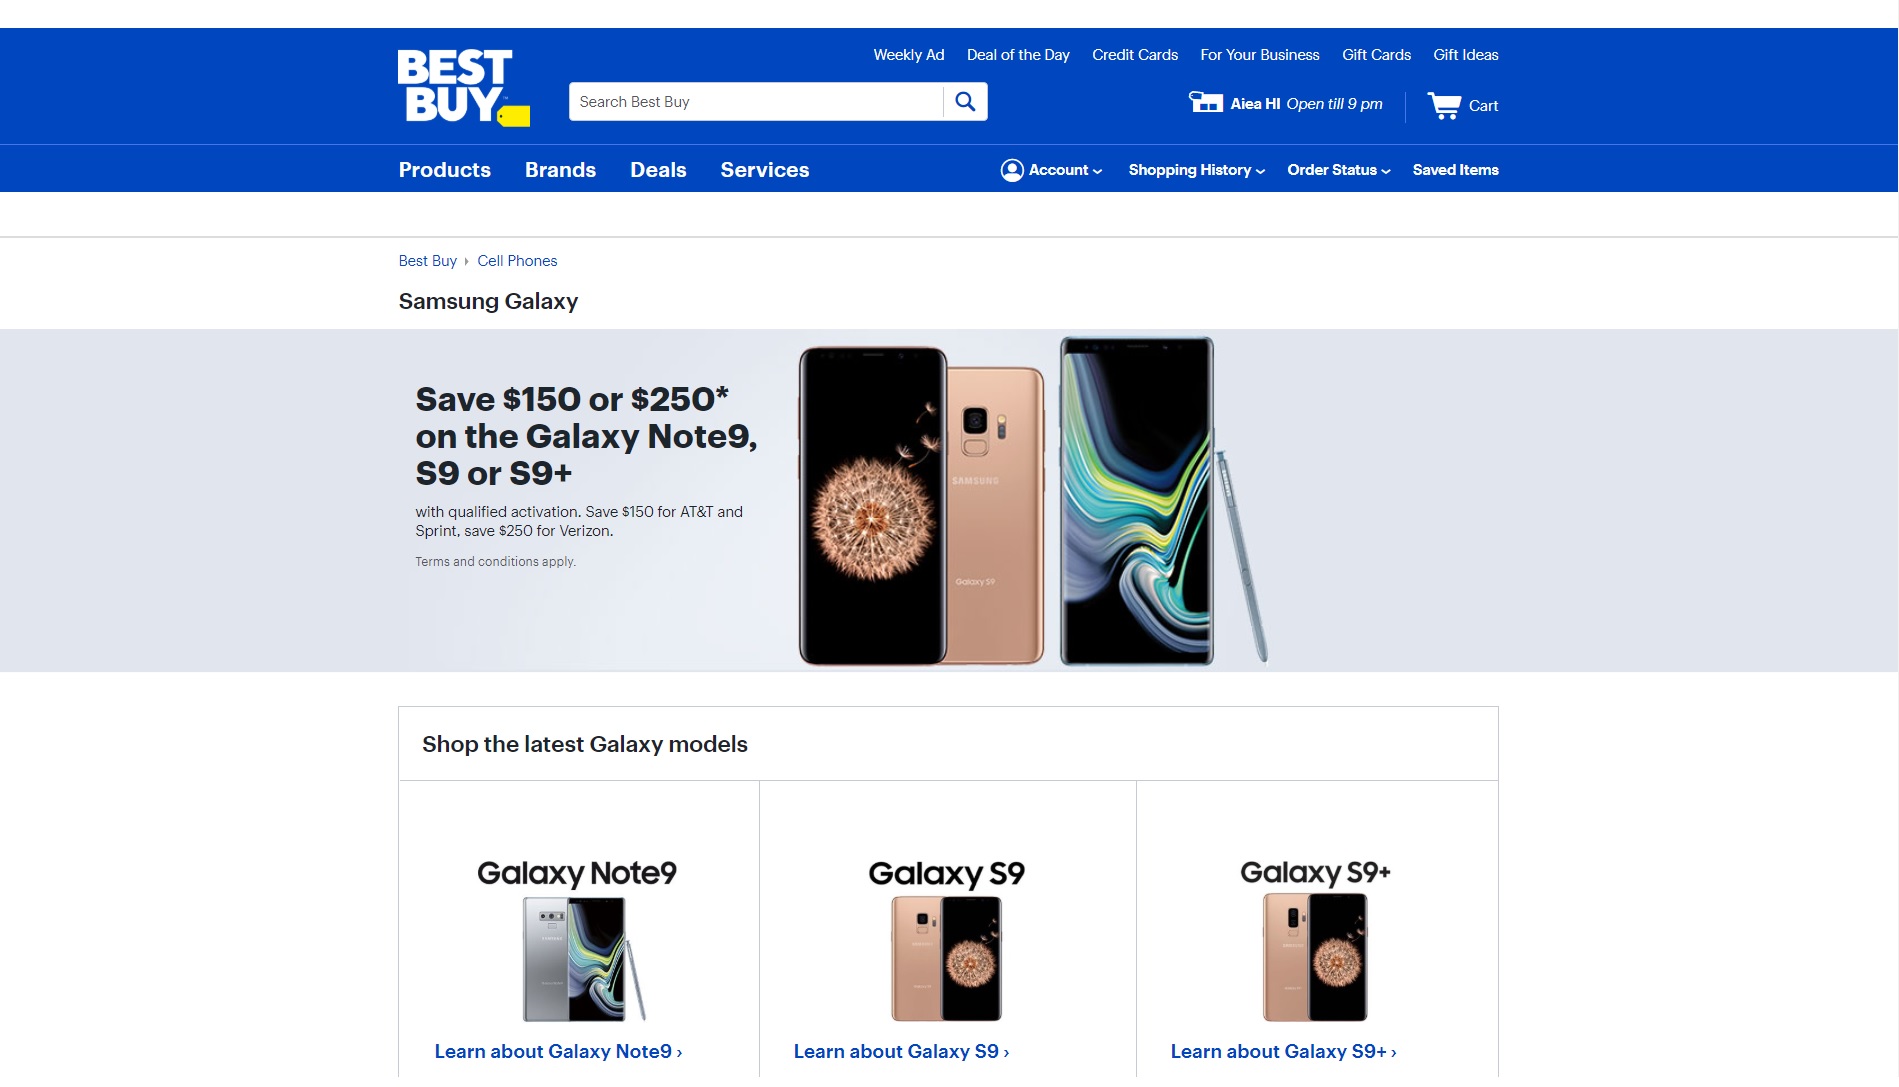 Best Buy Samsung Galaxy offer